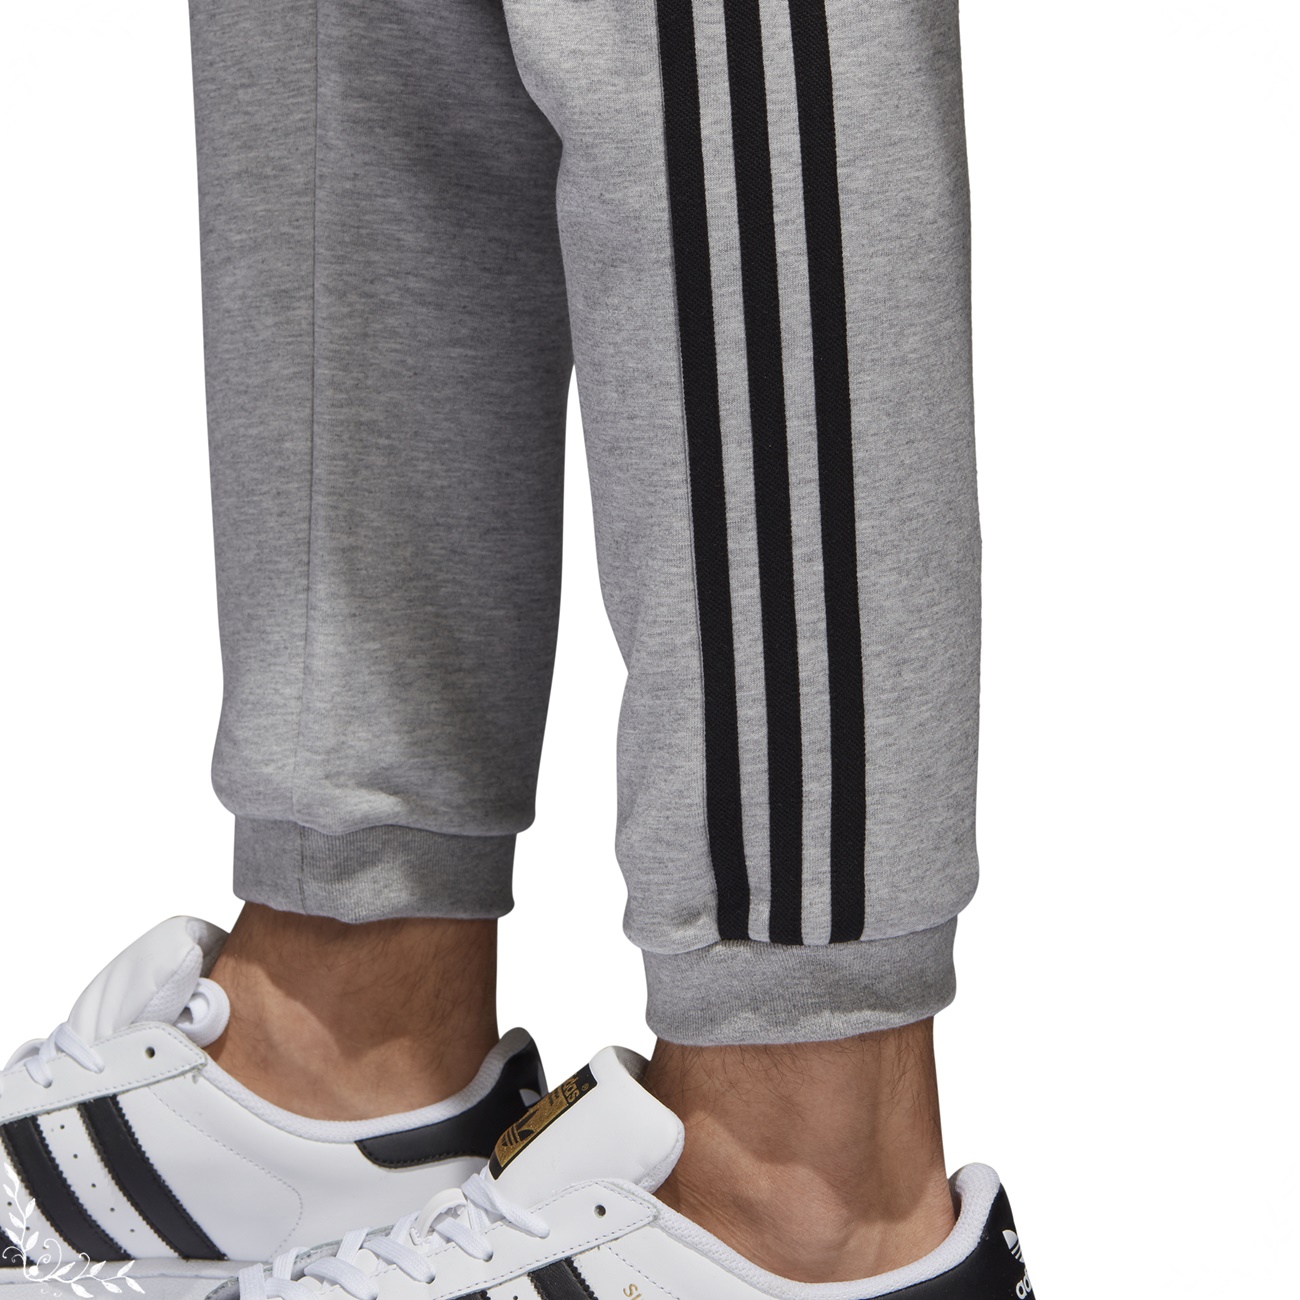 Adidas Originals Curated Pants Gray Heather)